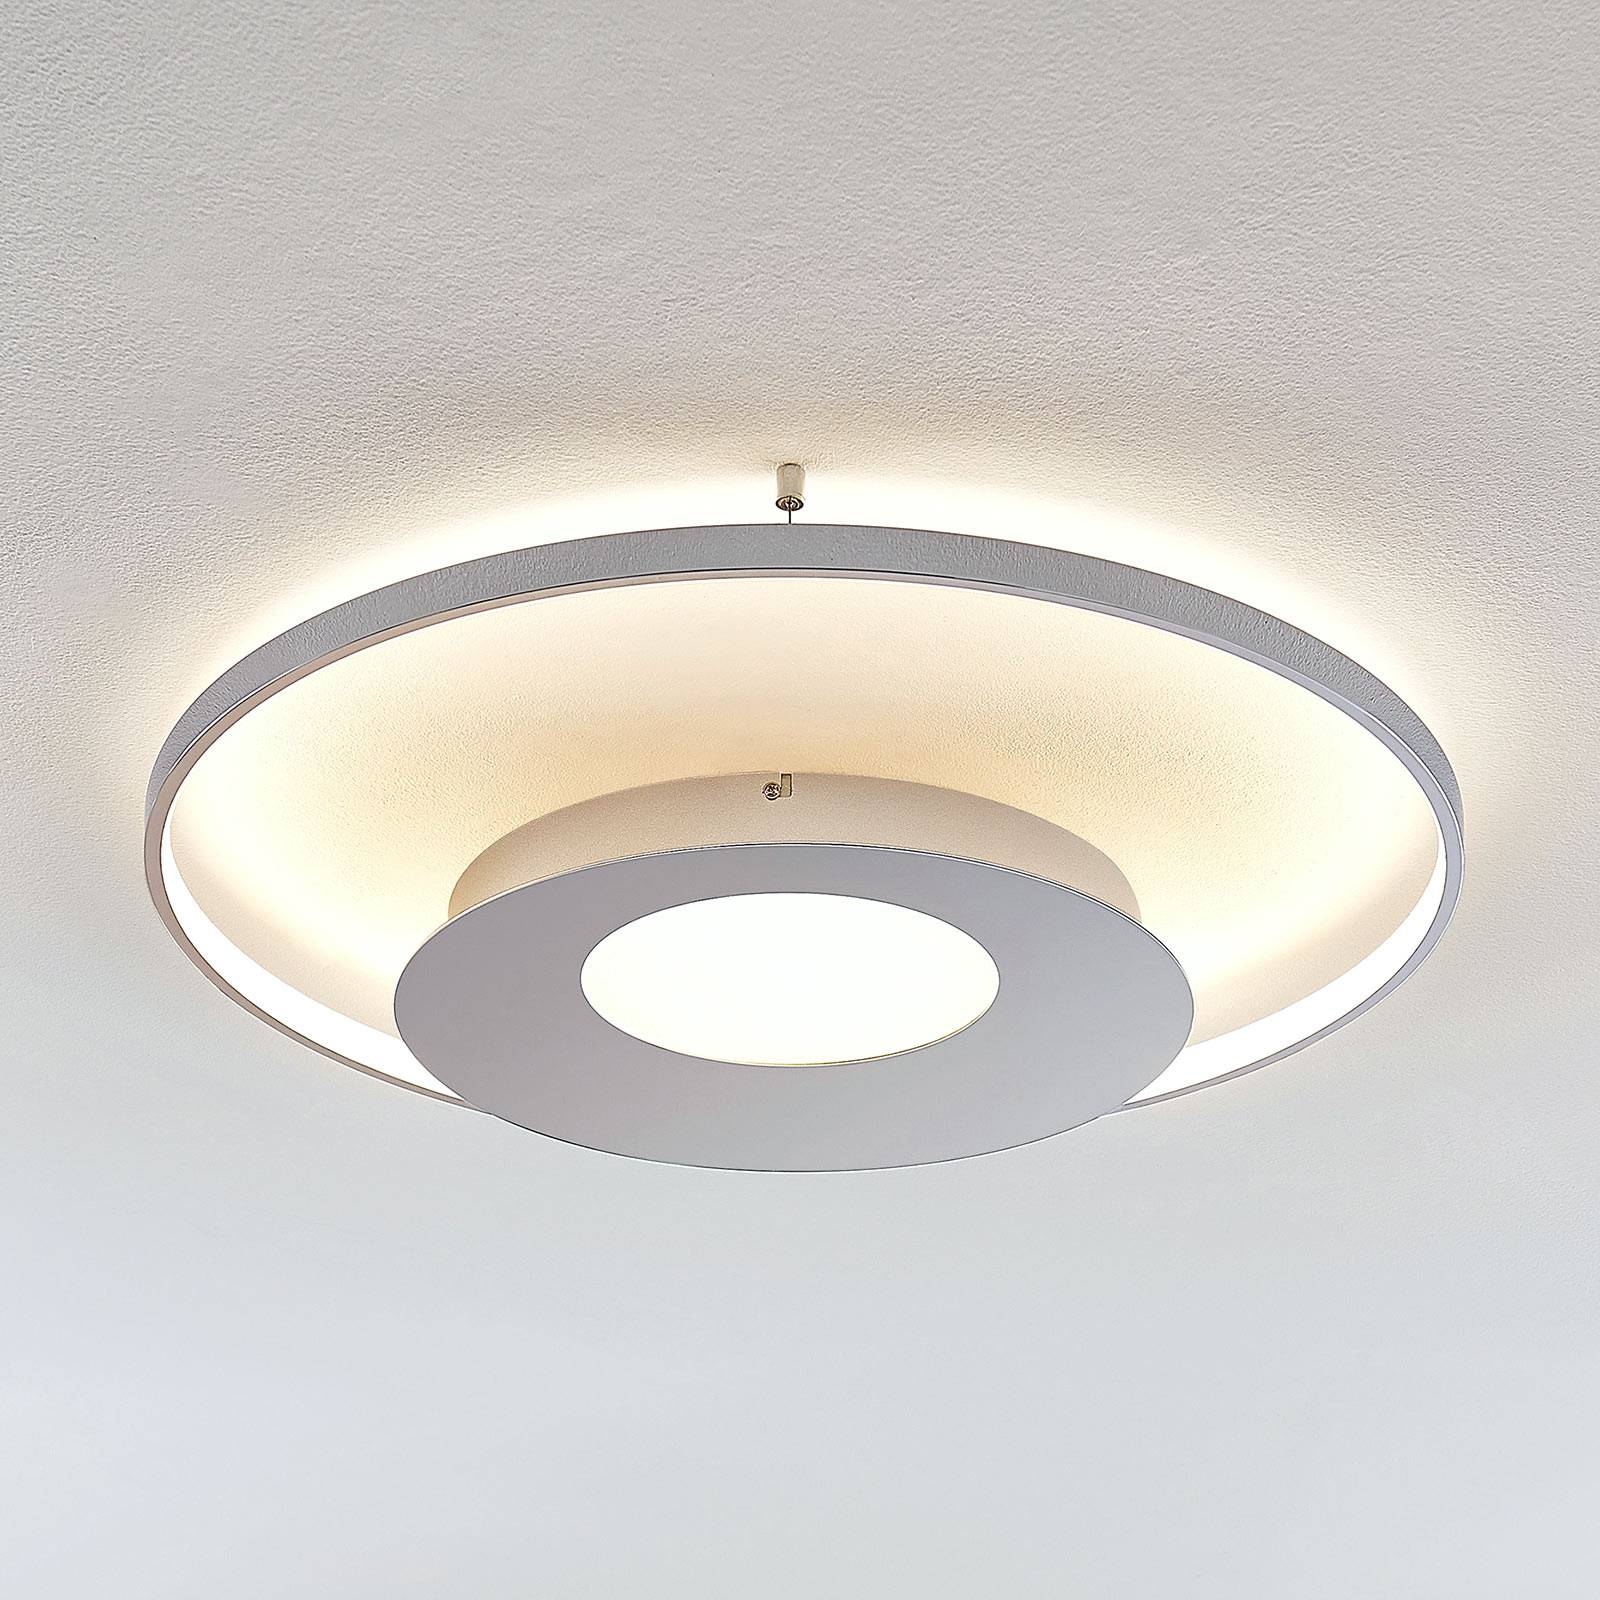 LED plafondlamp Anays, rond, 62 cm